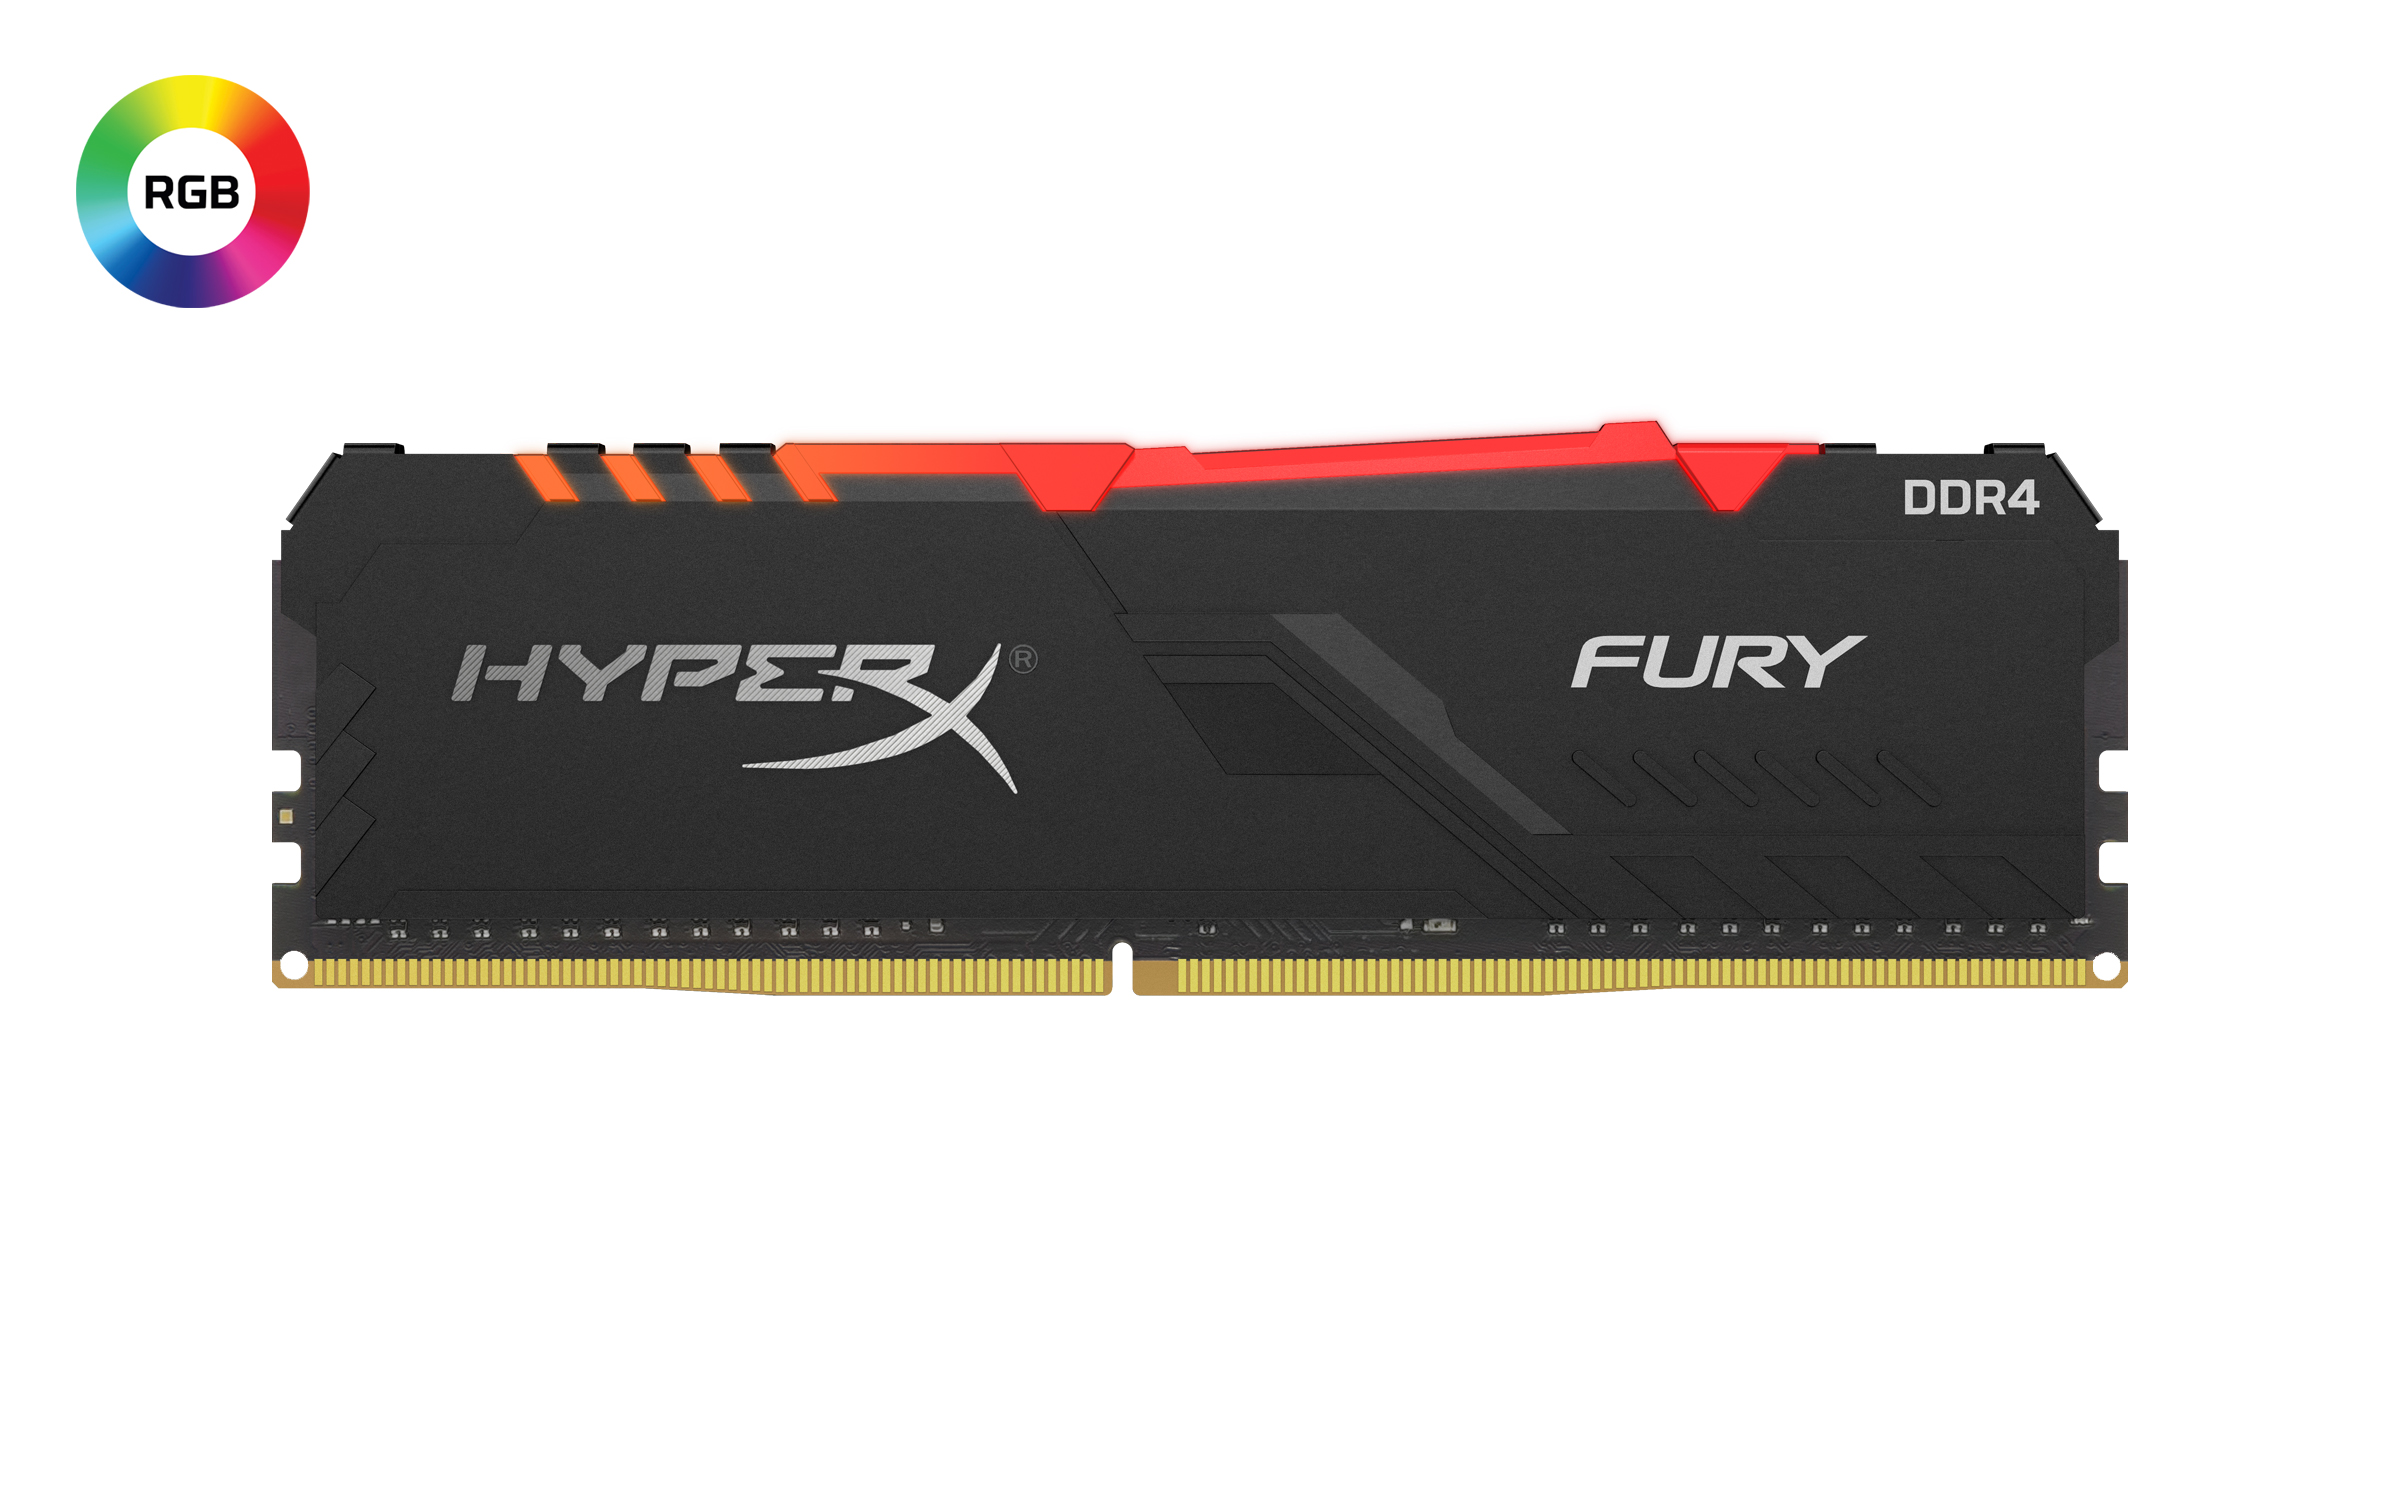 hyperx fury ddr4 rgb HyperX ขยายไลน์ผลิตภัณฑ์หน่วยความจำ DDR4 FURY RGB